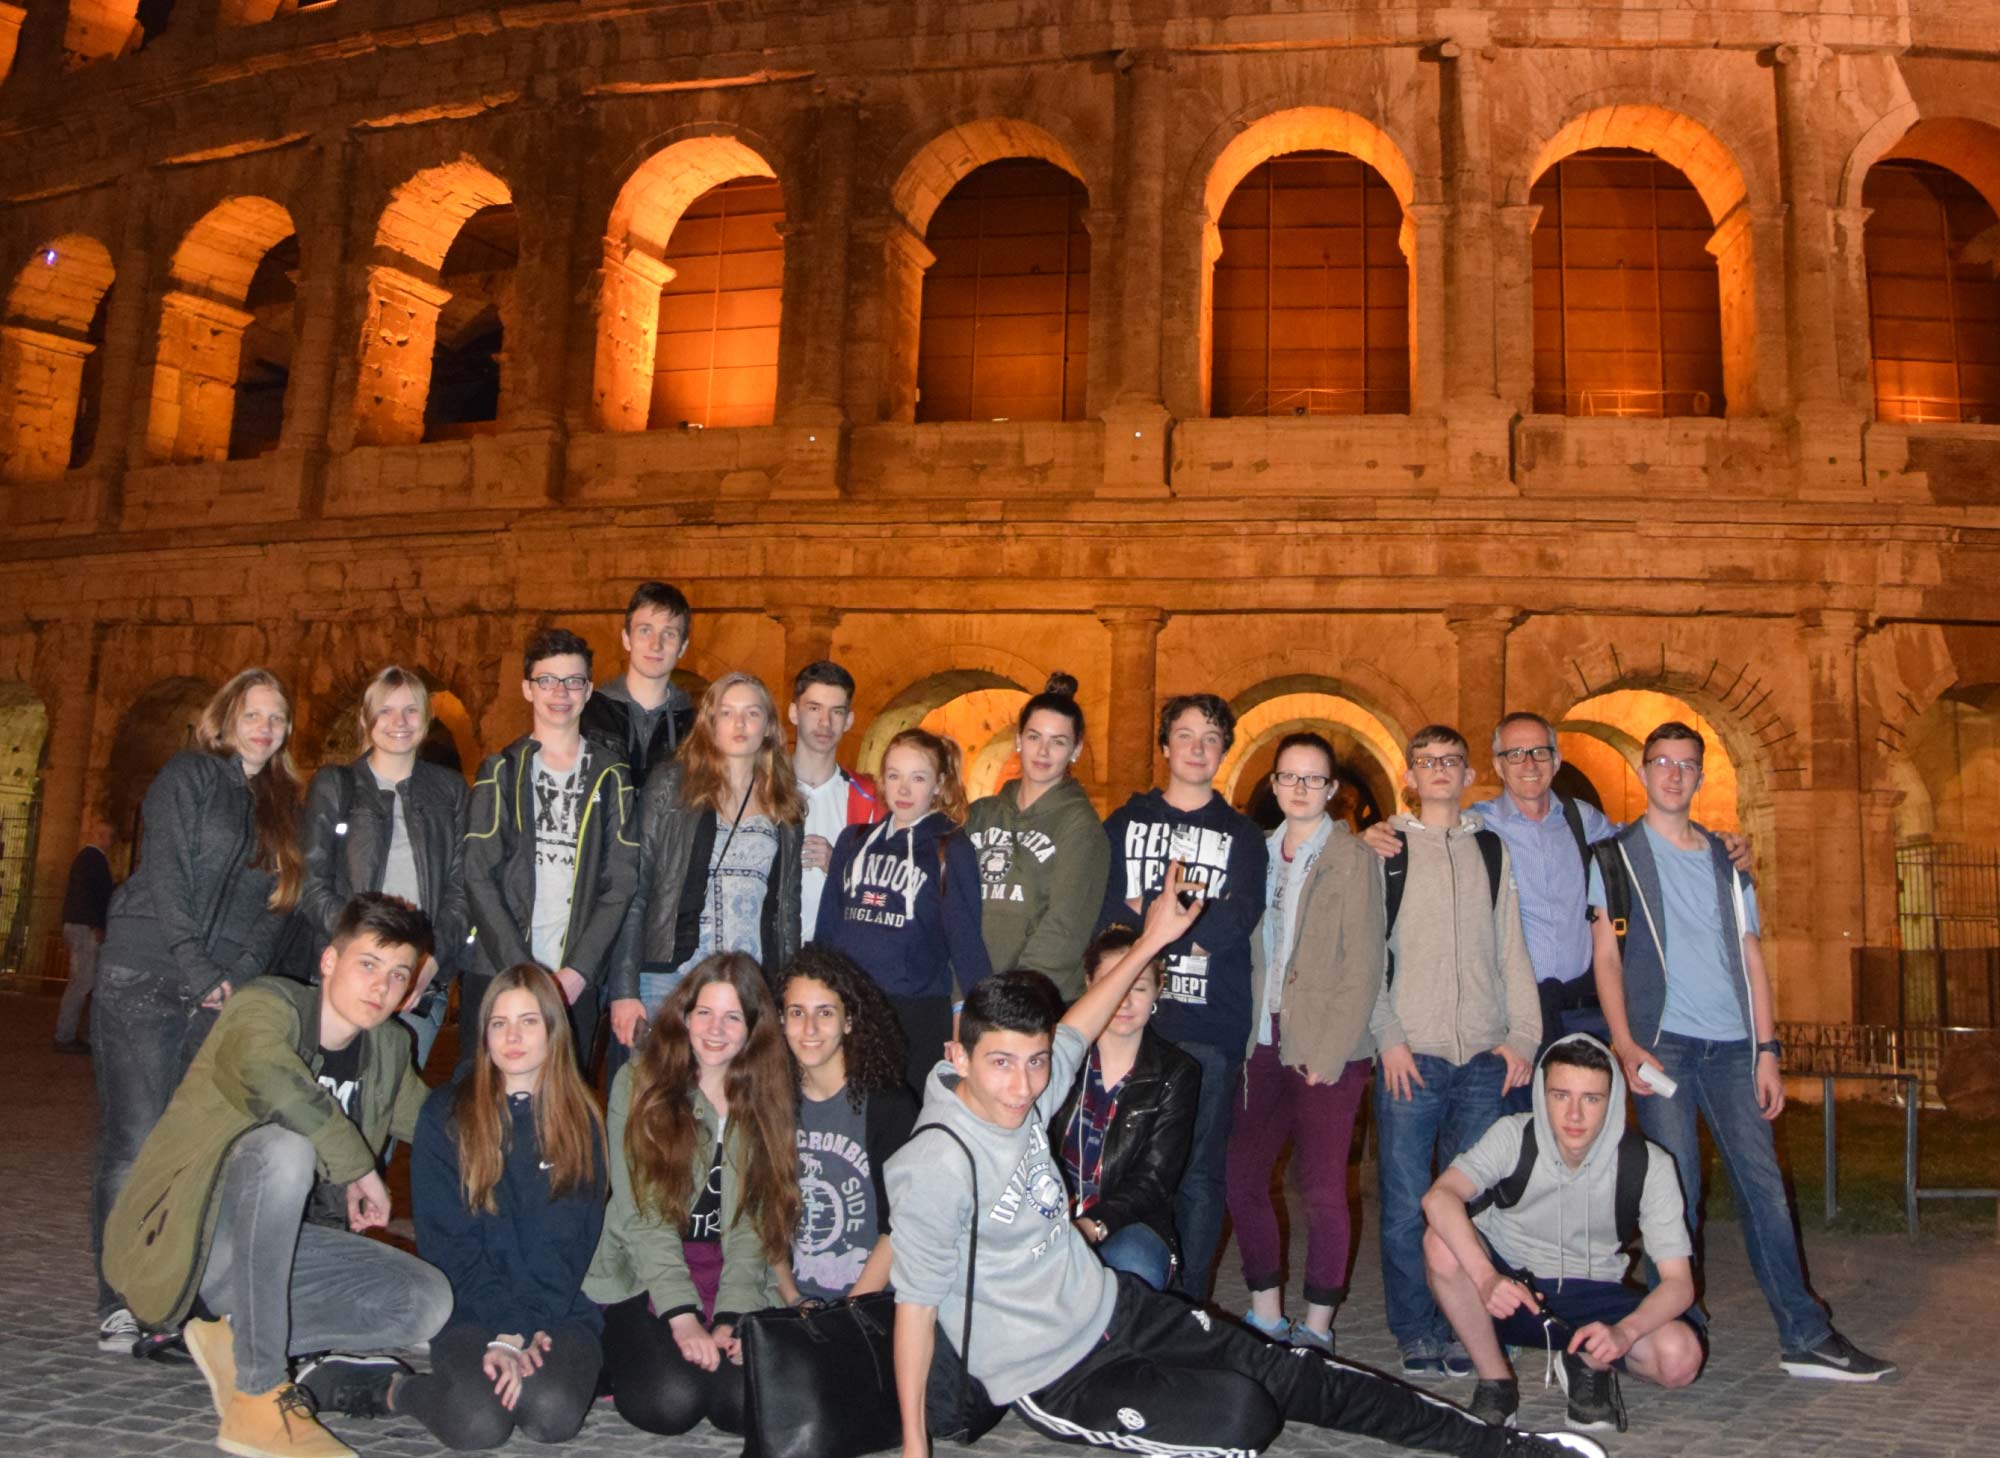 Lateinklasse als Gruppenbild vor dem beleuchteten Kolosseum in Rom bei Nacht